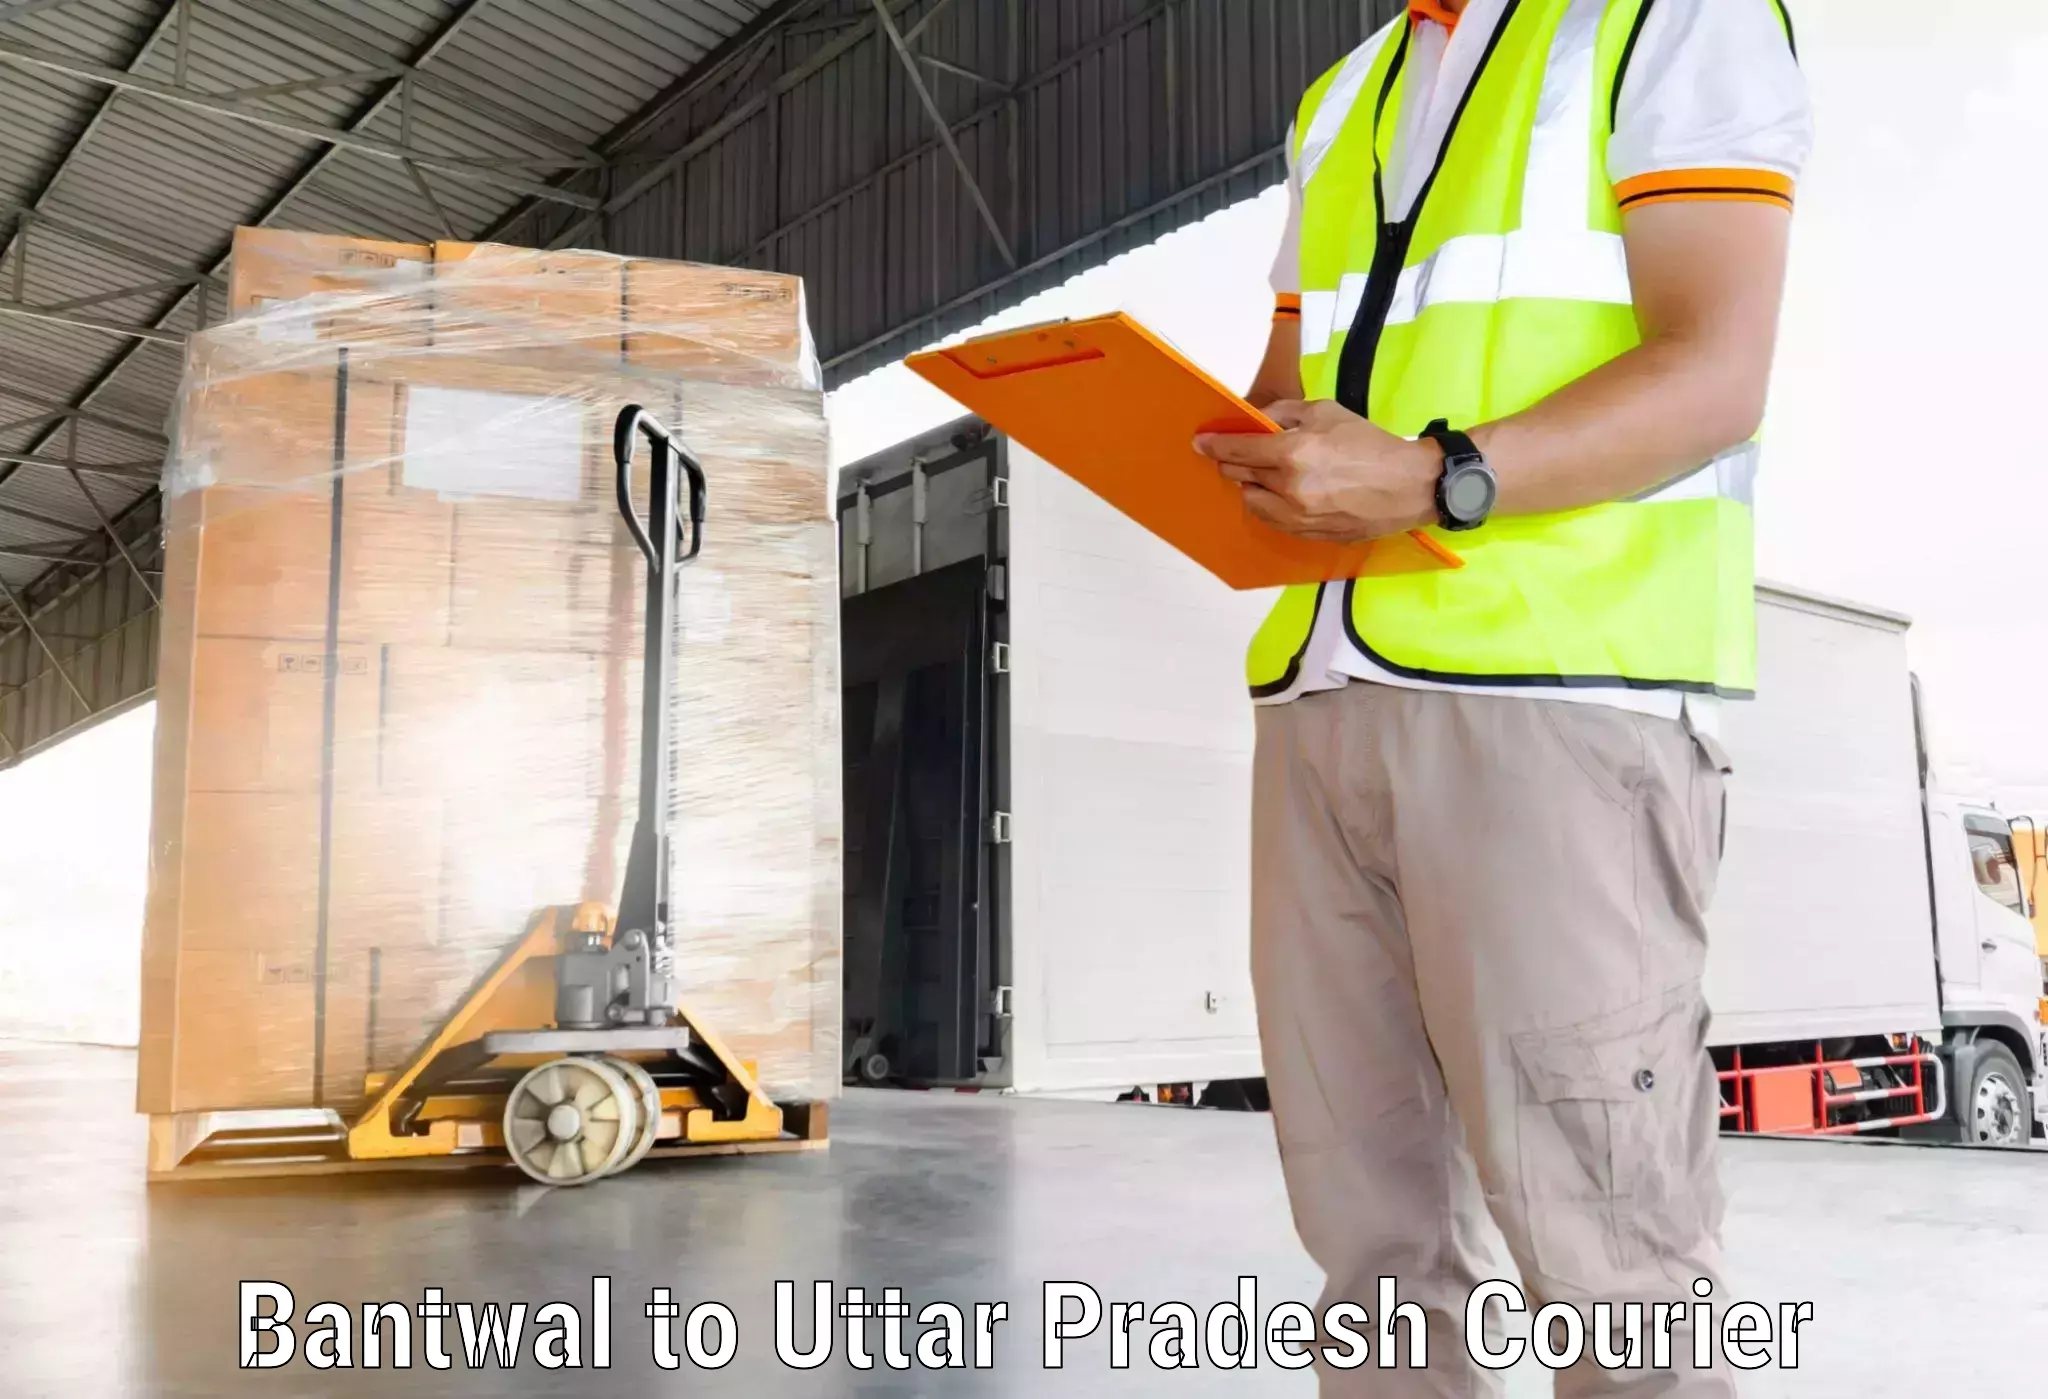 Automated parcel services Bantwal to Sahatwar